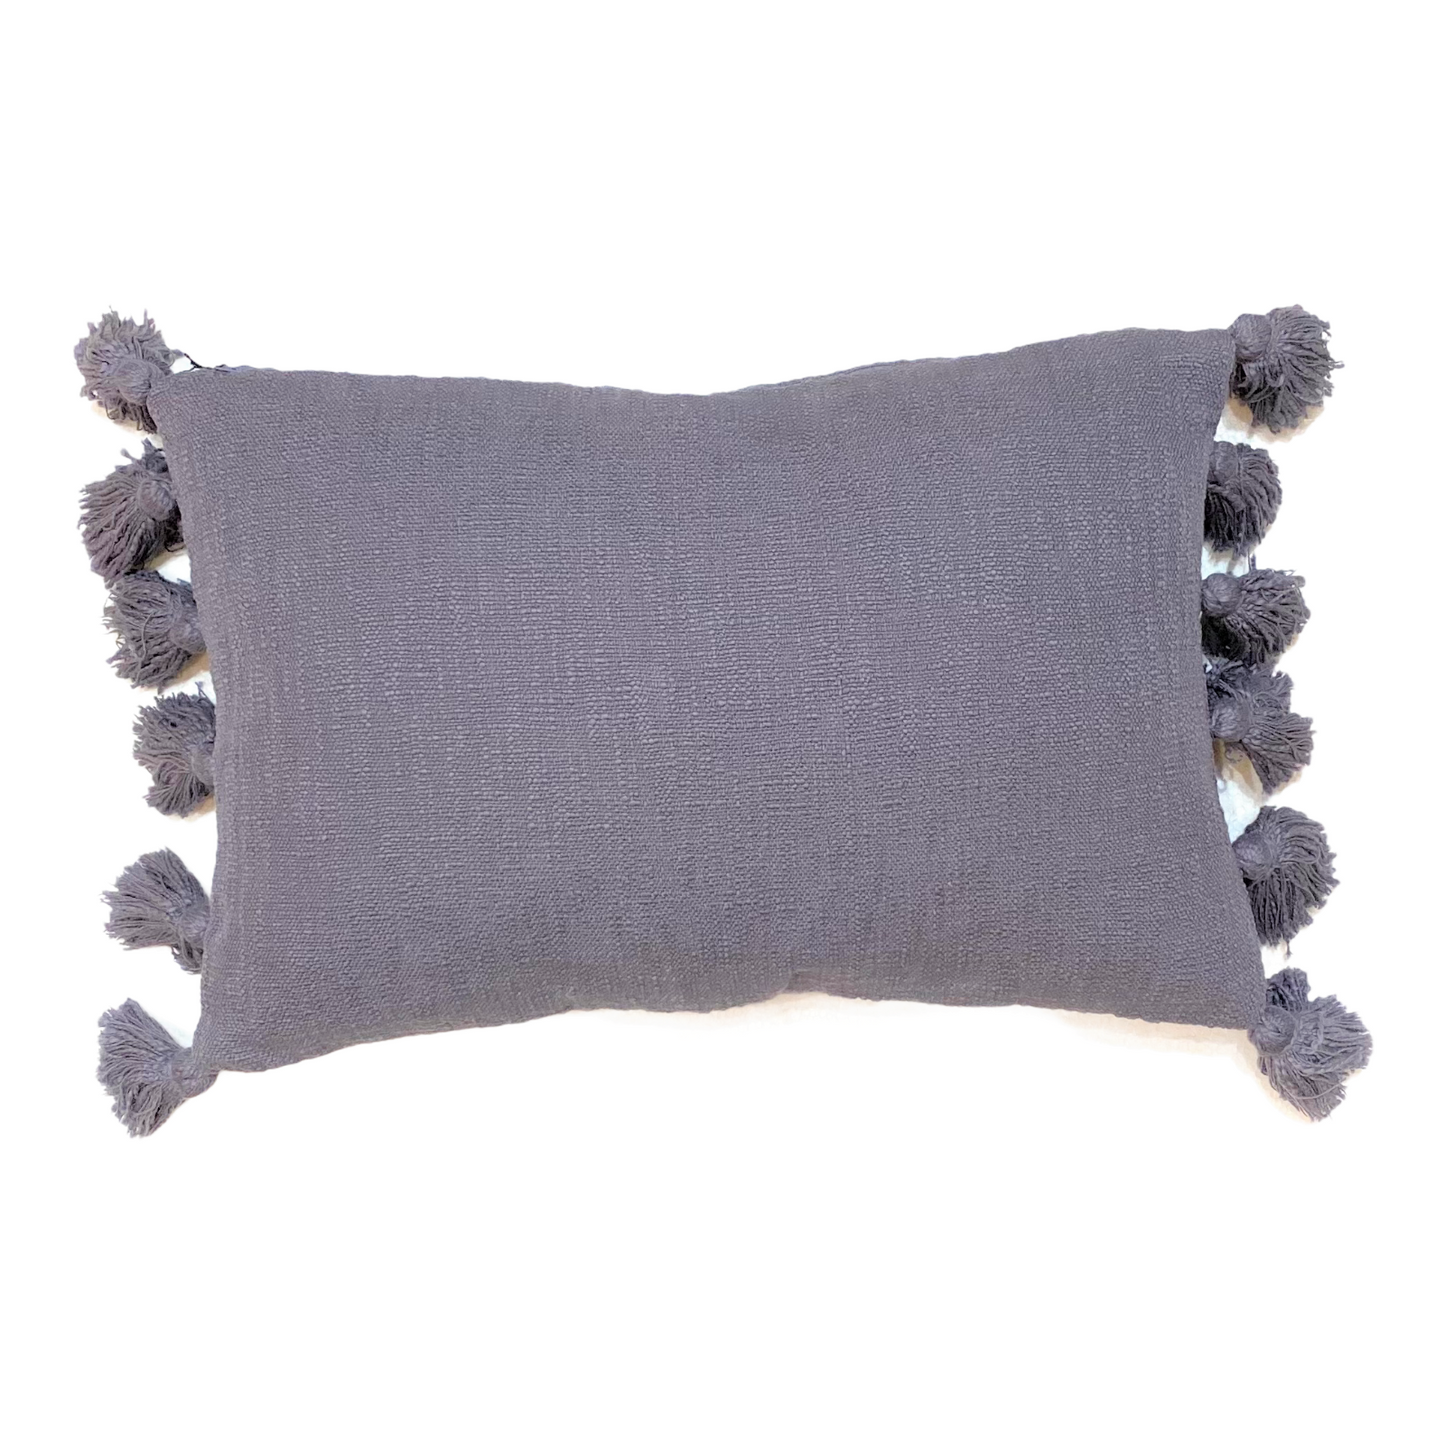 Cotton Lumbar Throw Pillow with Tassels - Violet Gray - Mellow Monkey